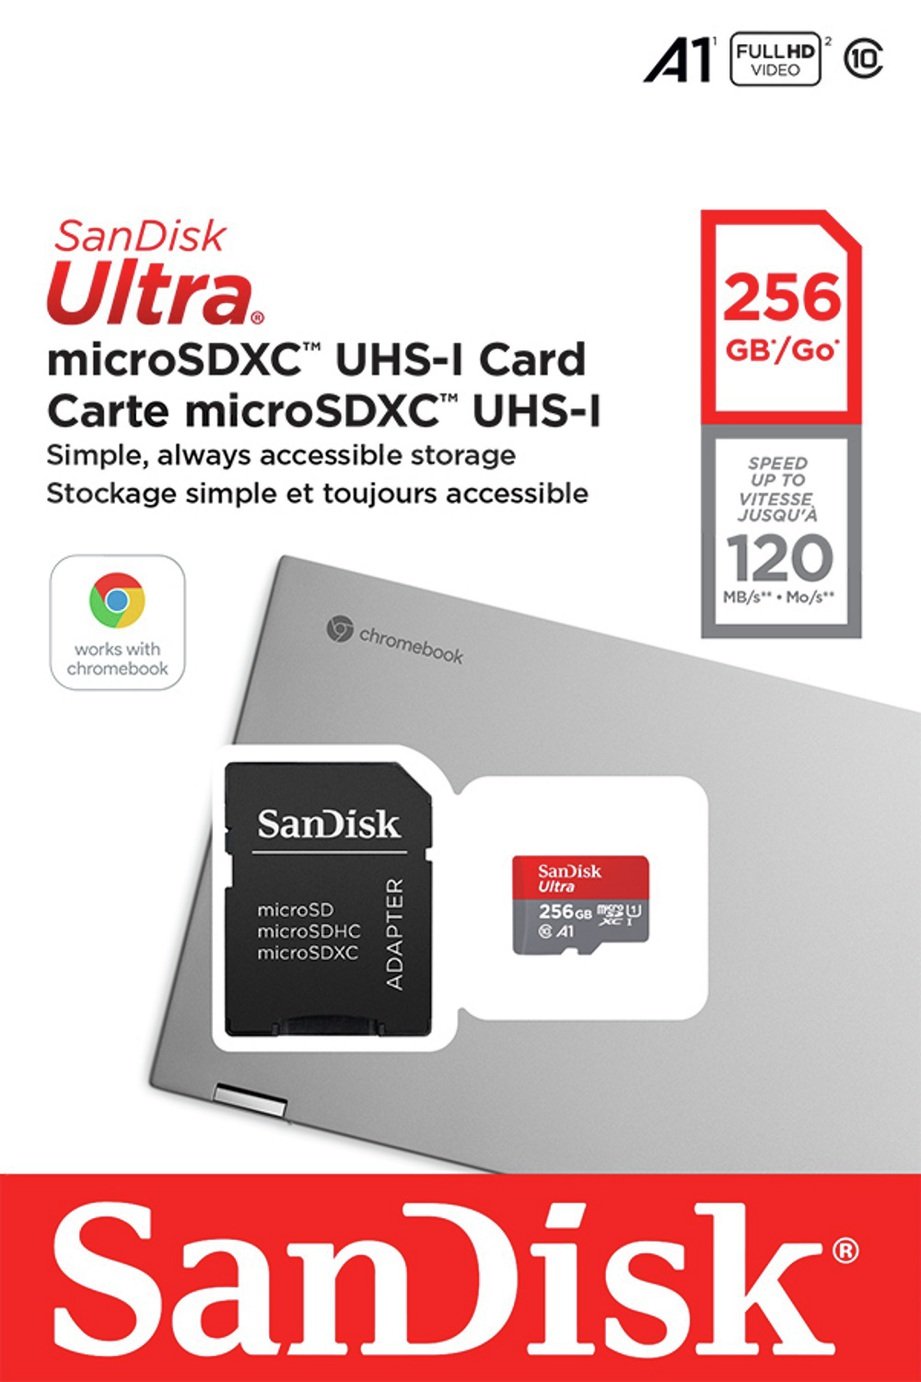 SanDisk Ultra MicroSDXC UHS-I Card for Chromebook - 256GB